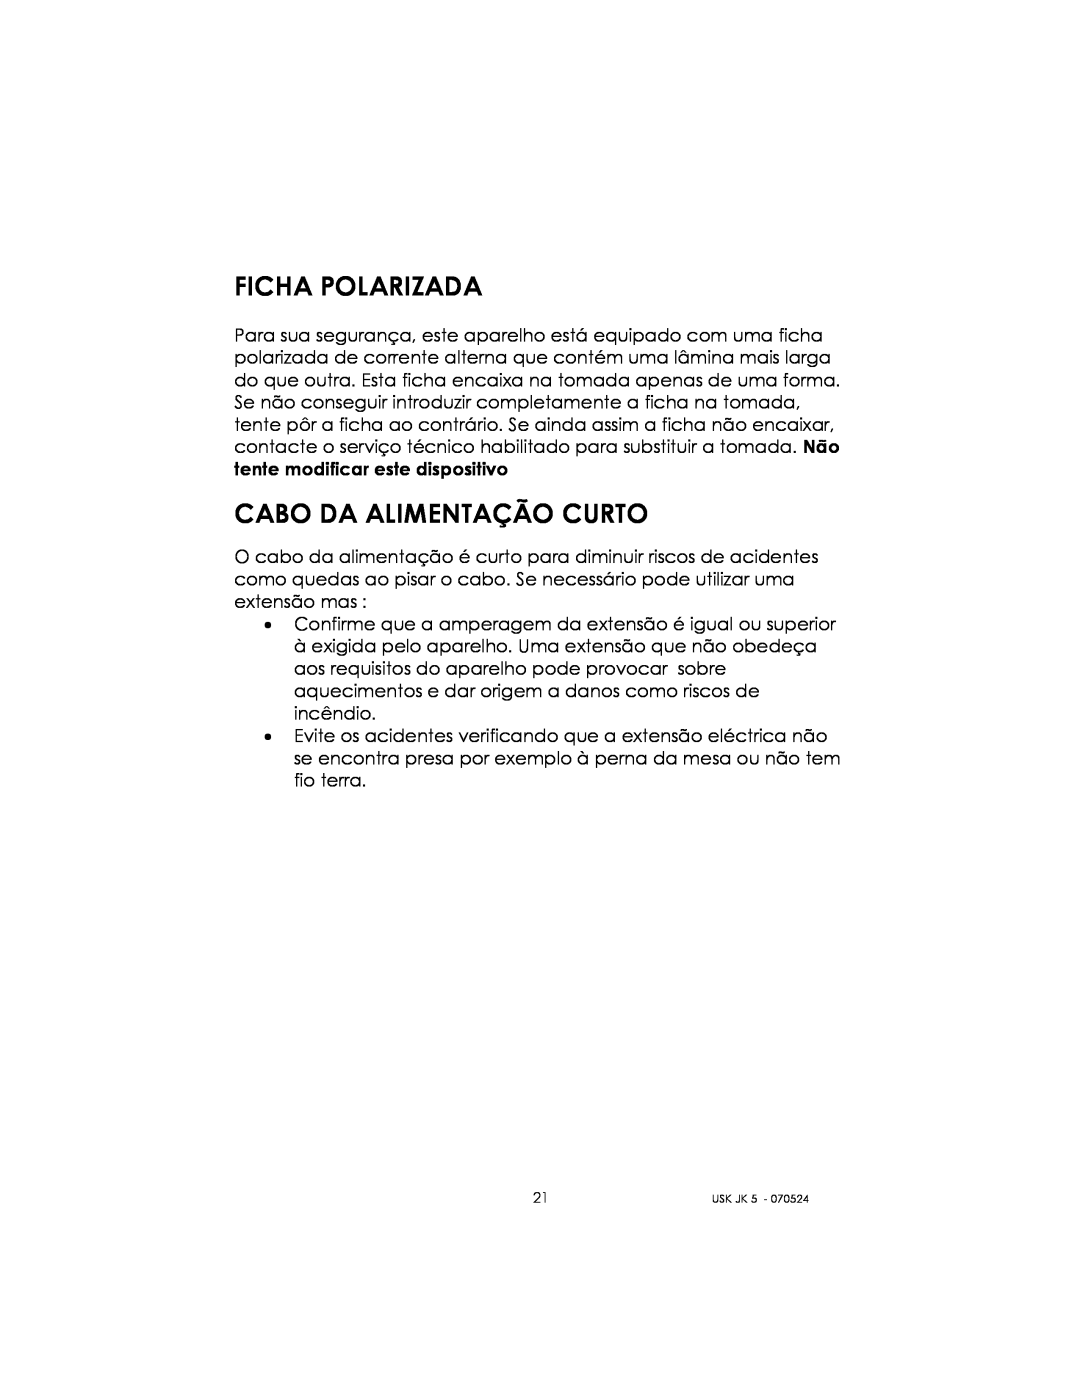 Kalorik USK JK 5 manual Ficha Polarizada, Cabo Da Alimentação Curto 